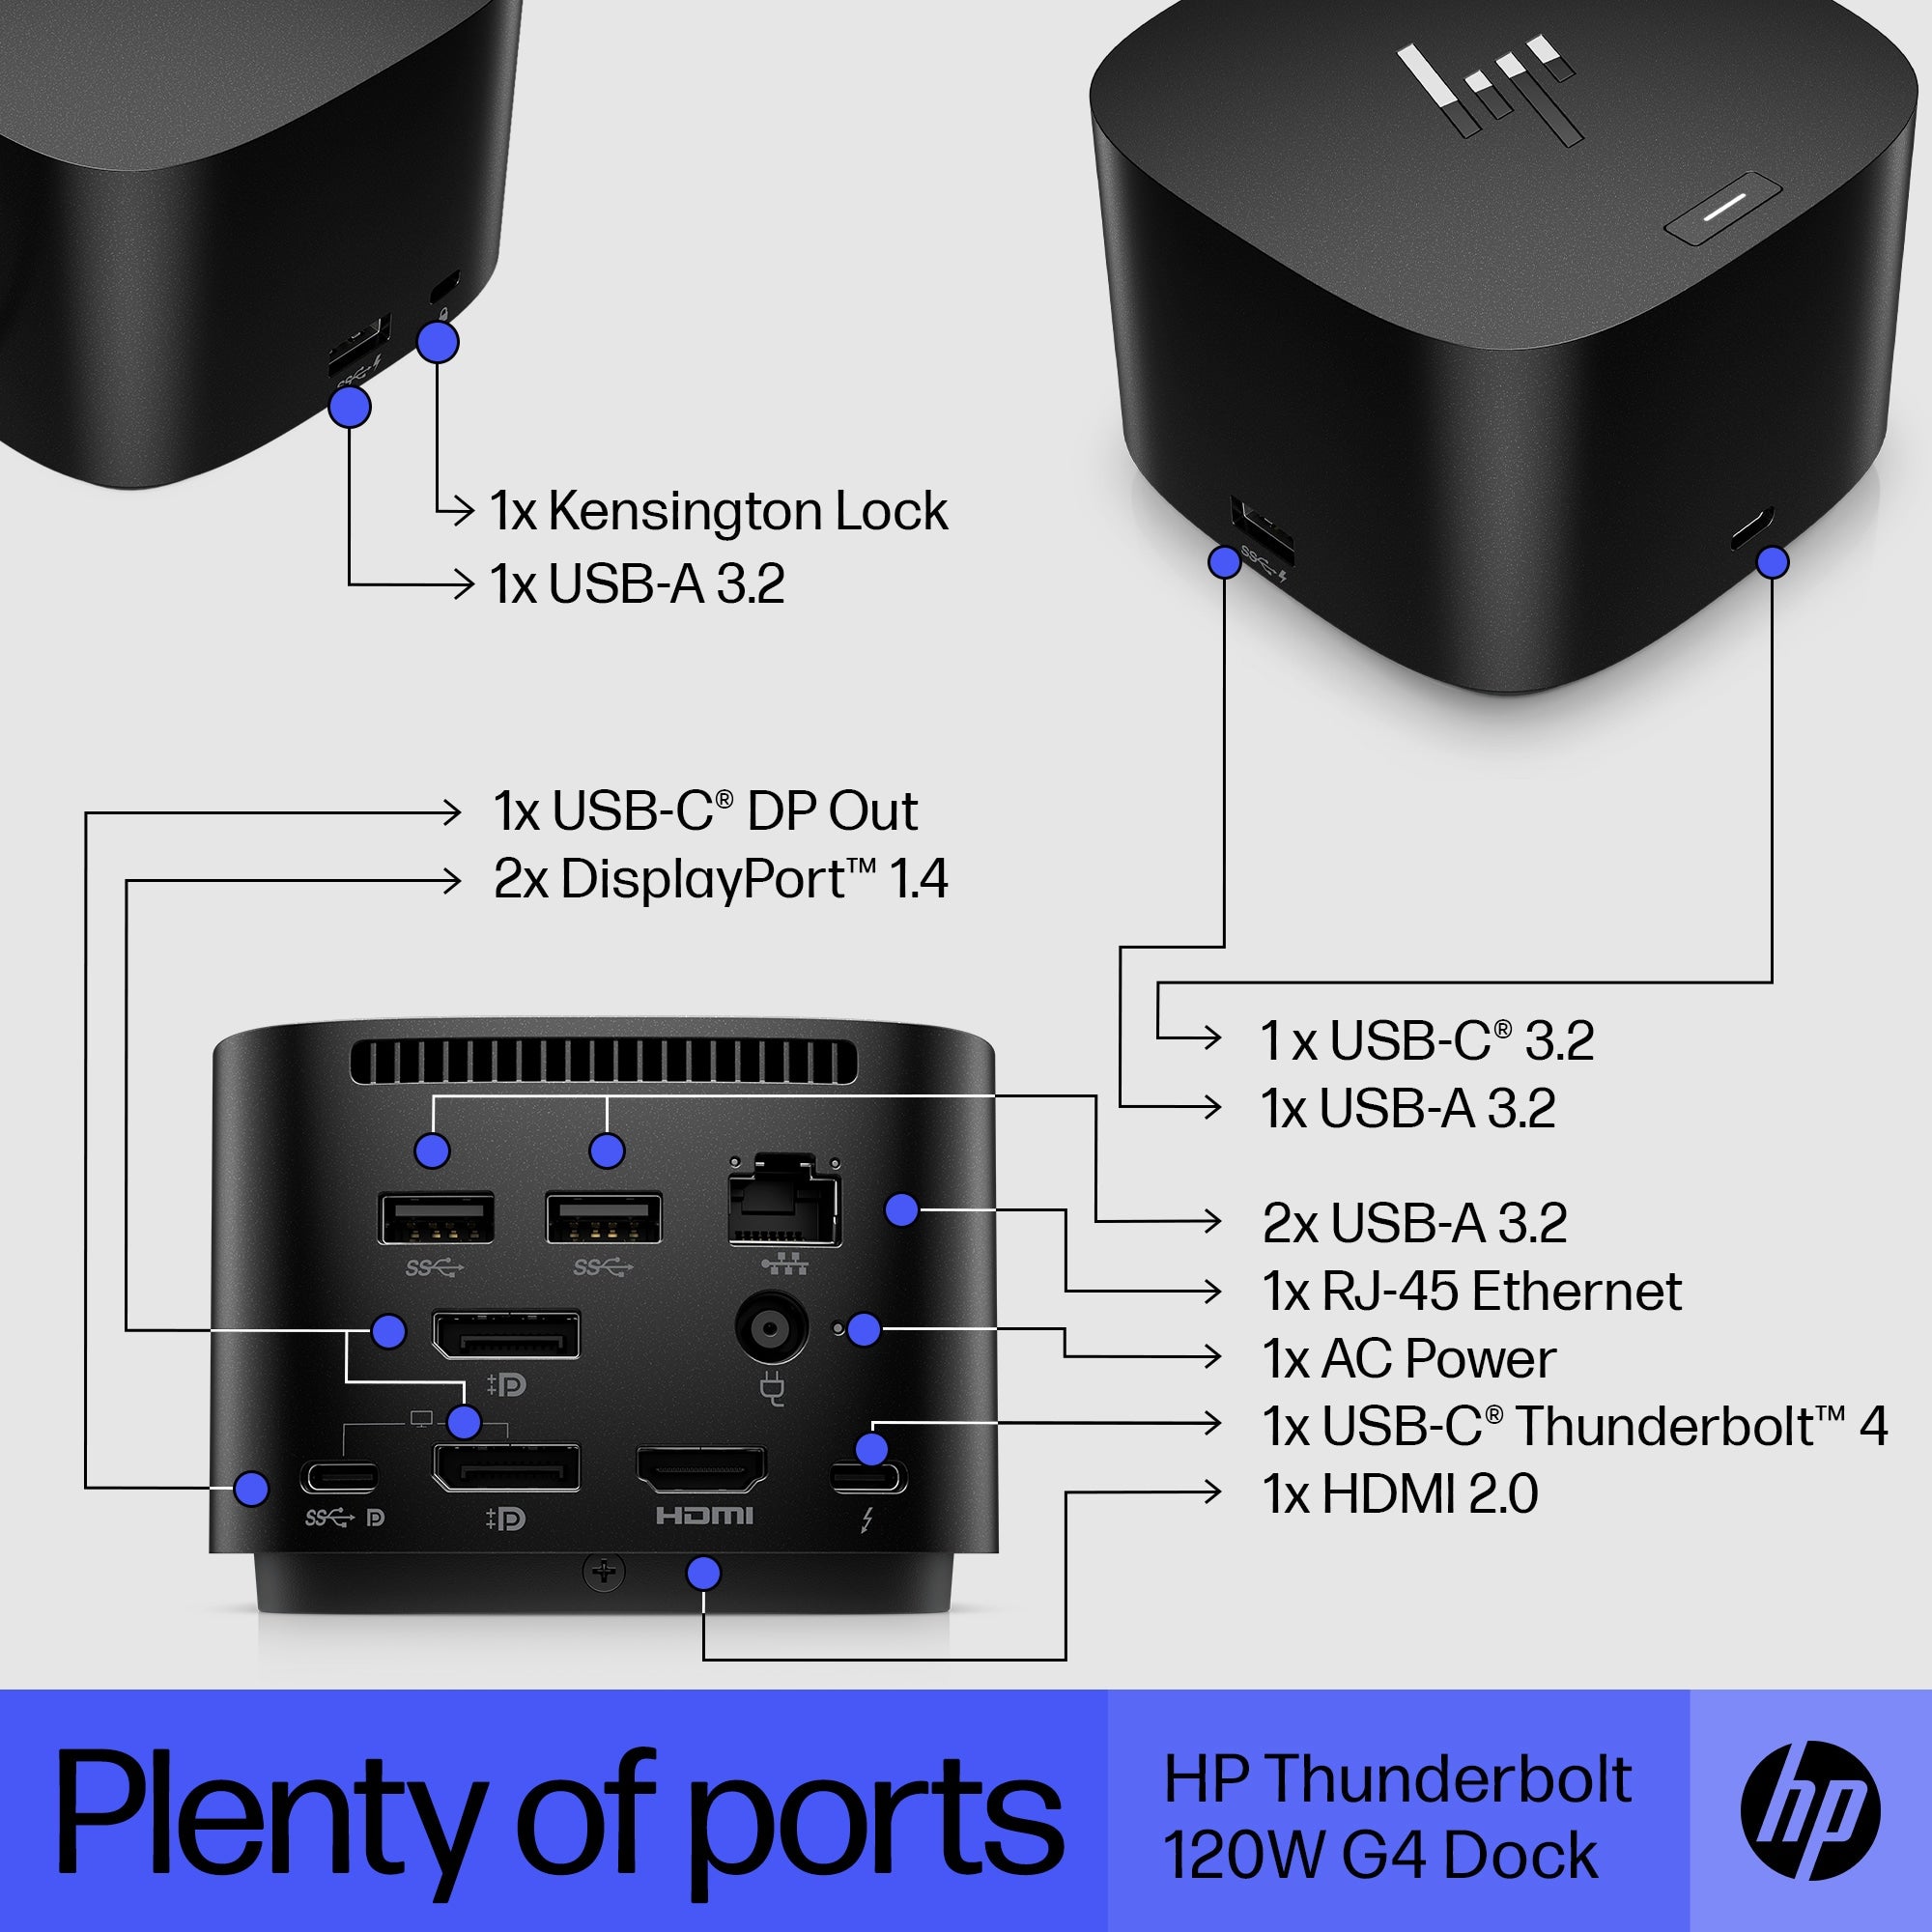 HP Thunderbolt Dock 120W G4